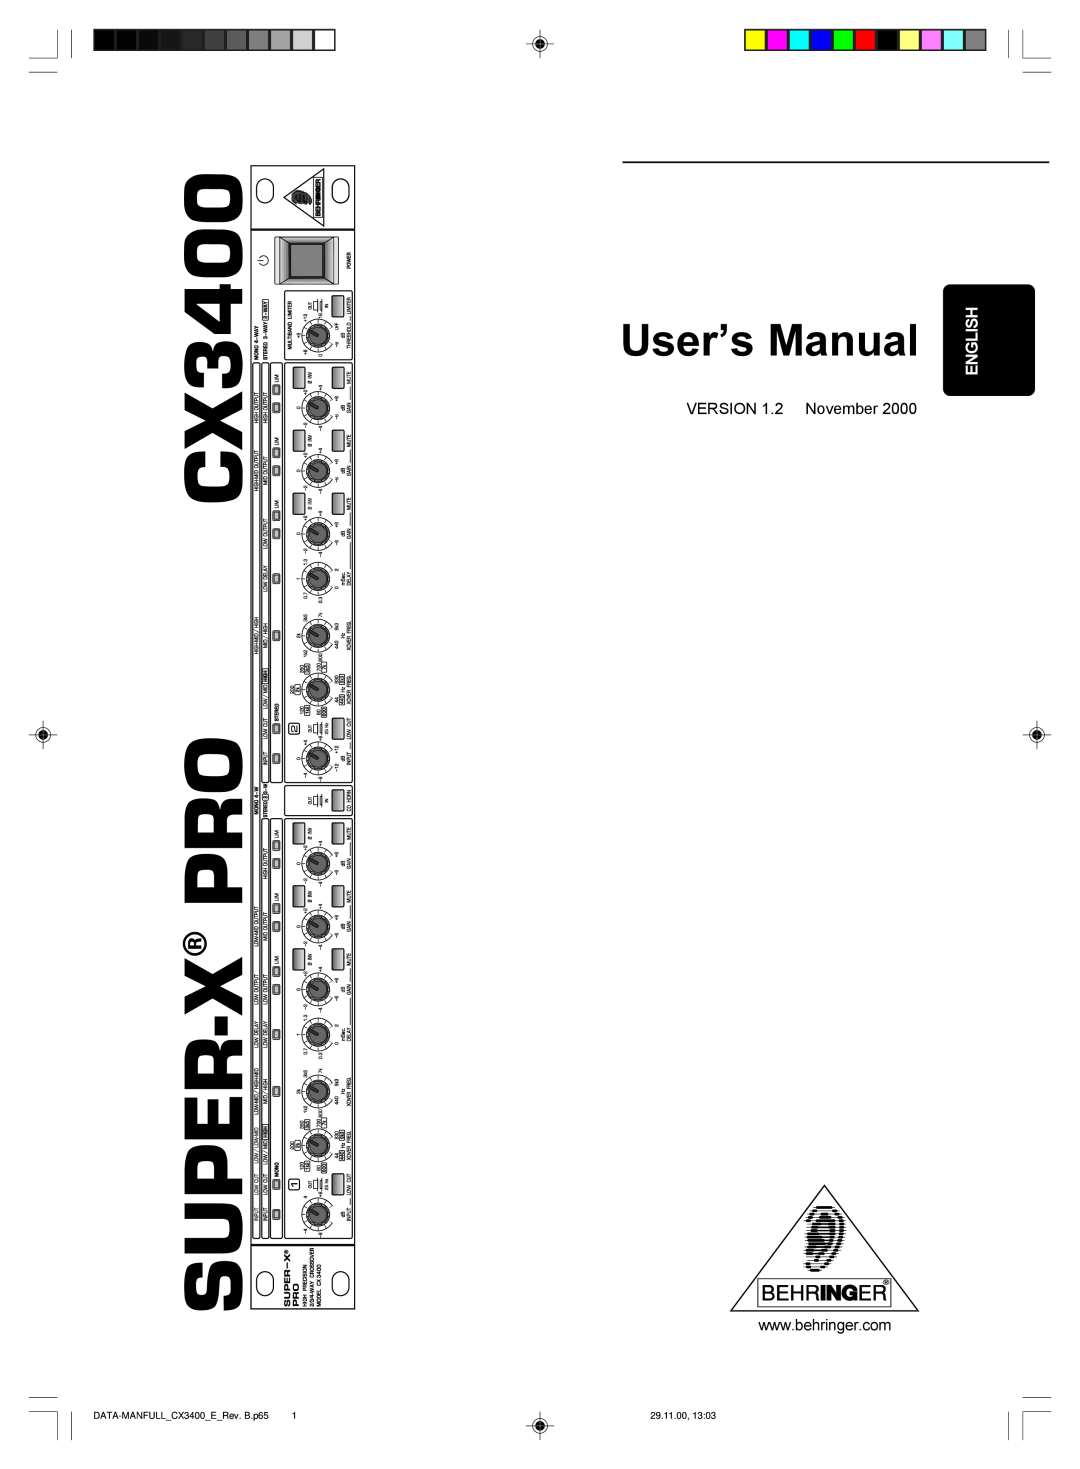 Behringer manual DATA-MANFULL CX3400 E Rev.B.p65, 29.11.00, 13, VERSION1.2 November 